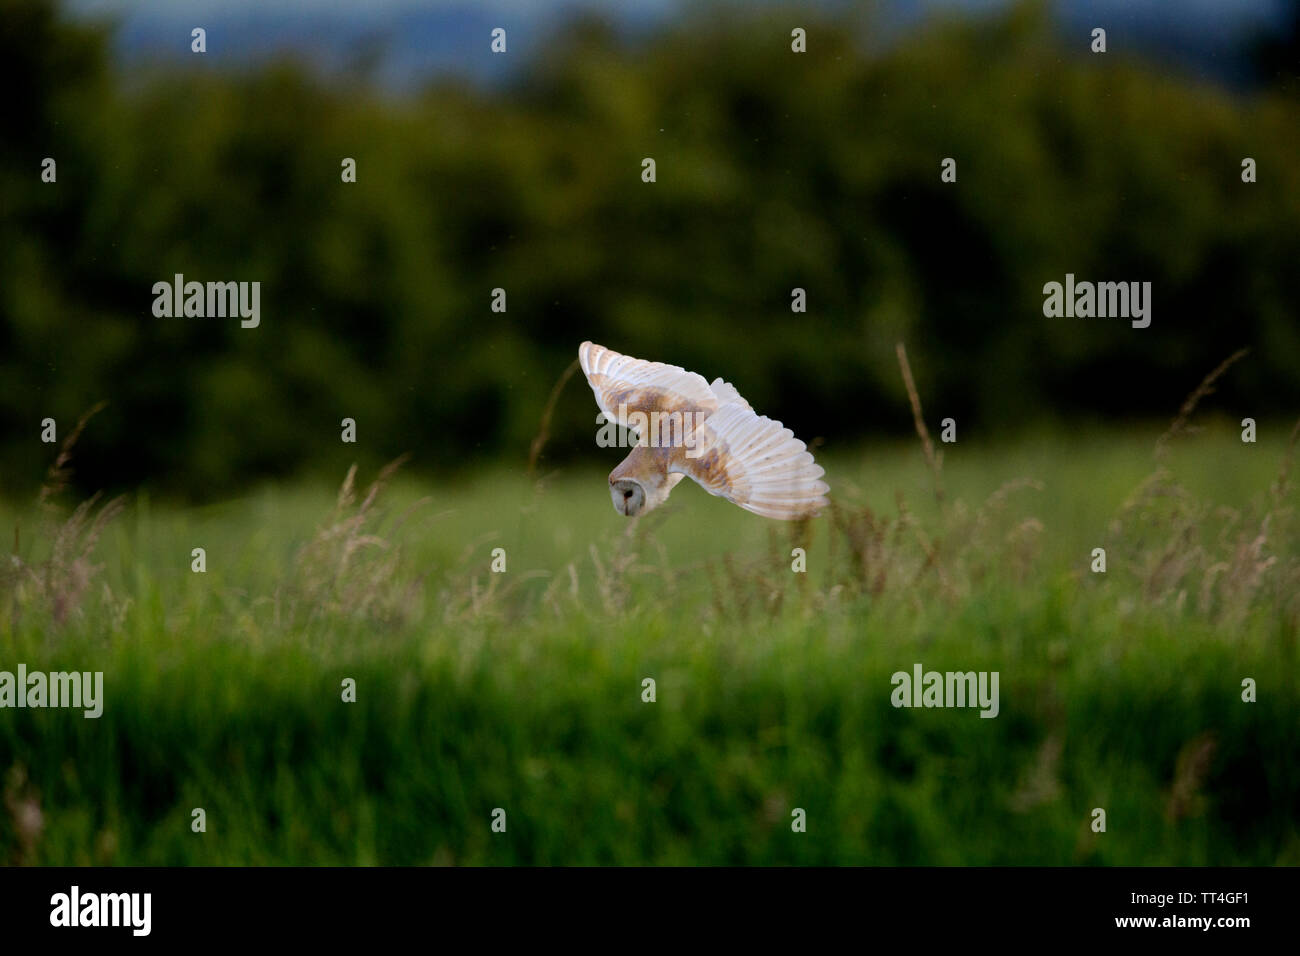 Barn-owl (Tyto alba) DIVING DOWN INTO GRASS TO CATCH PREY. Stock Photo